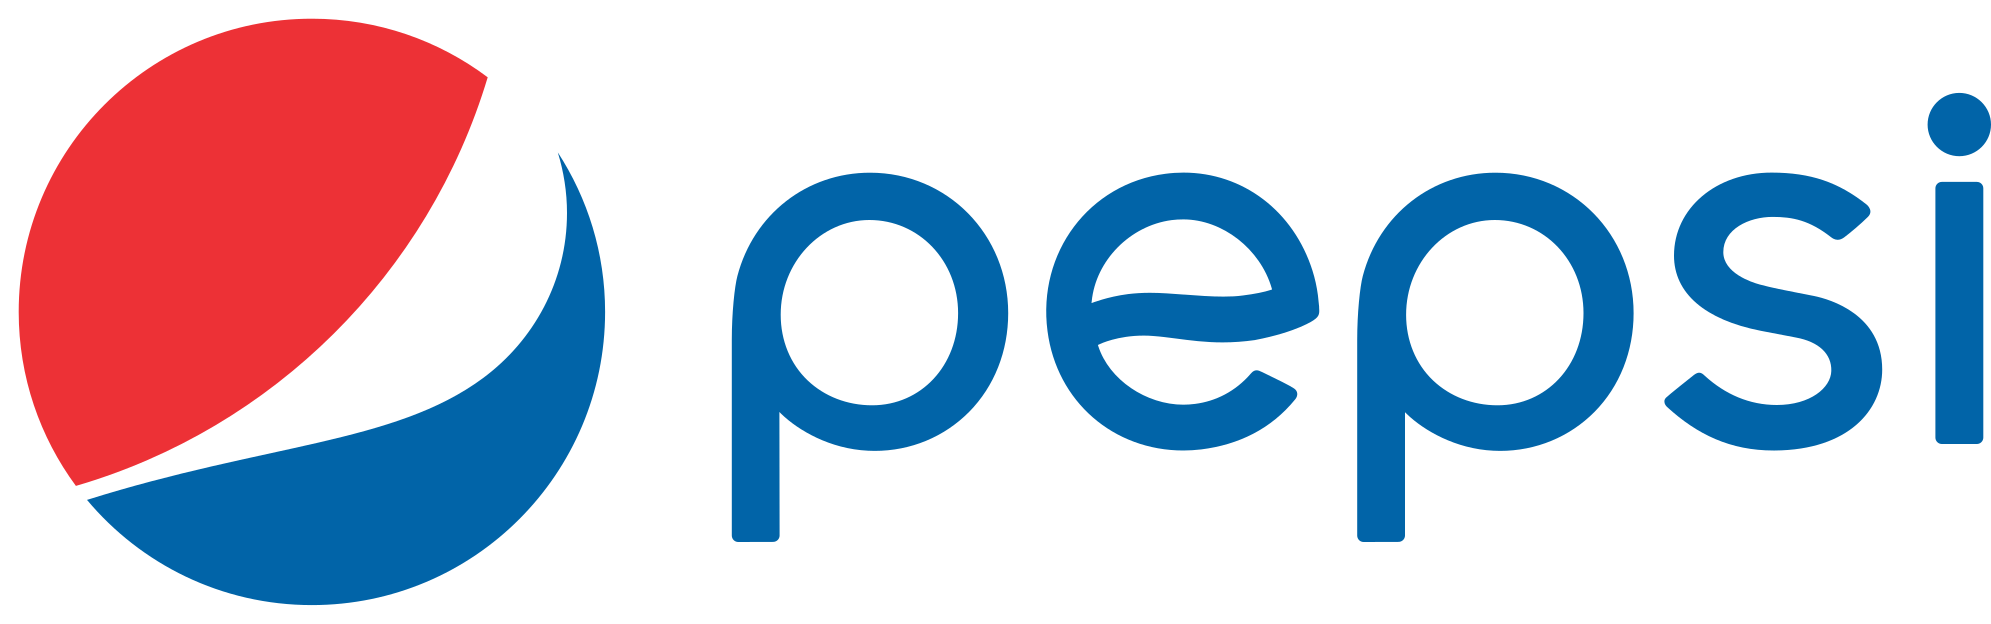 Pepsi_logo_(2014).svg